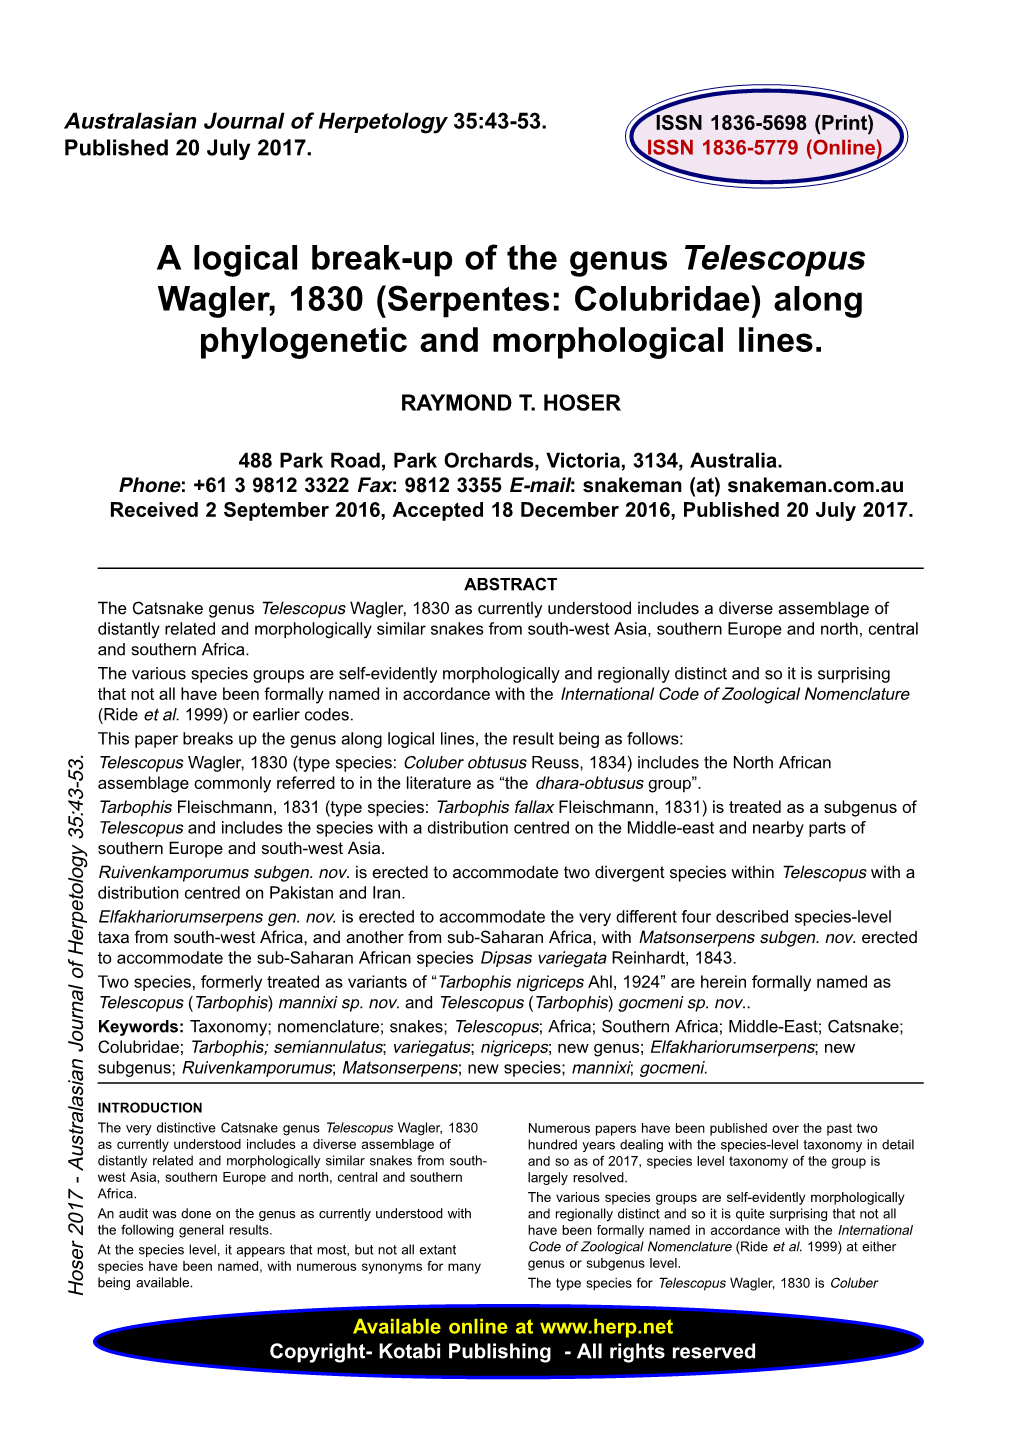 A Logical Break-Up of the Genus Telescopus Wagler, 1830 (Serpentes: Colubridae) Along Phylogenetic and Morphological Lines